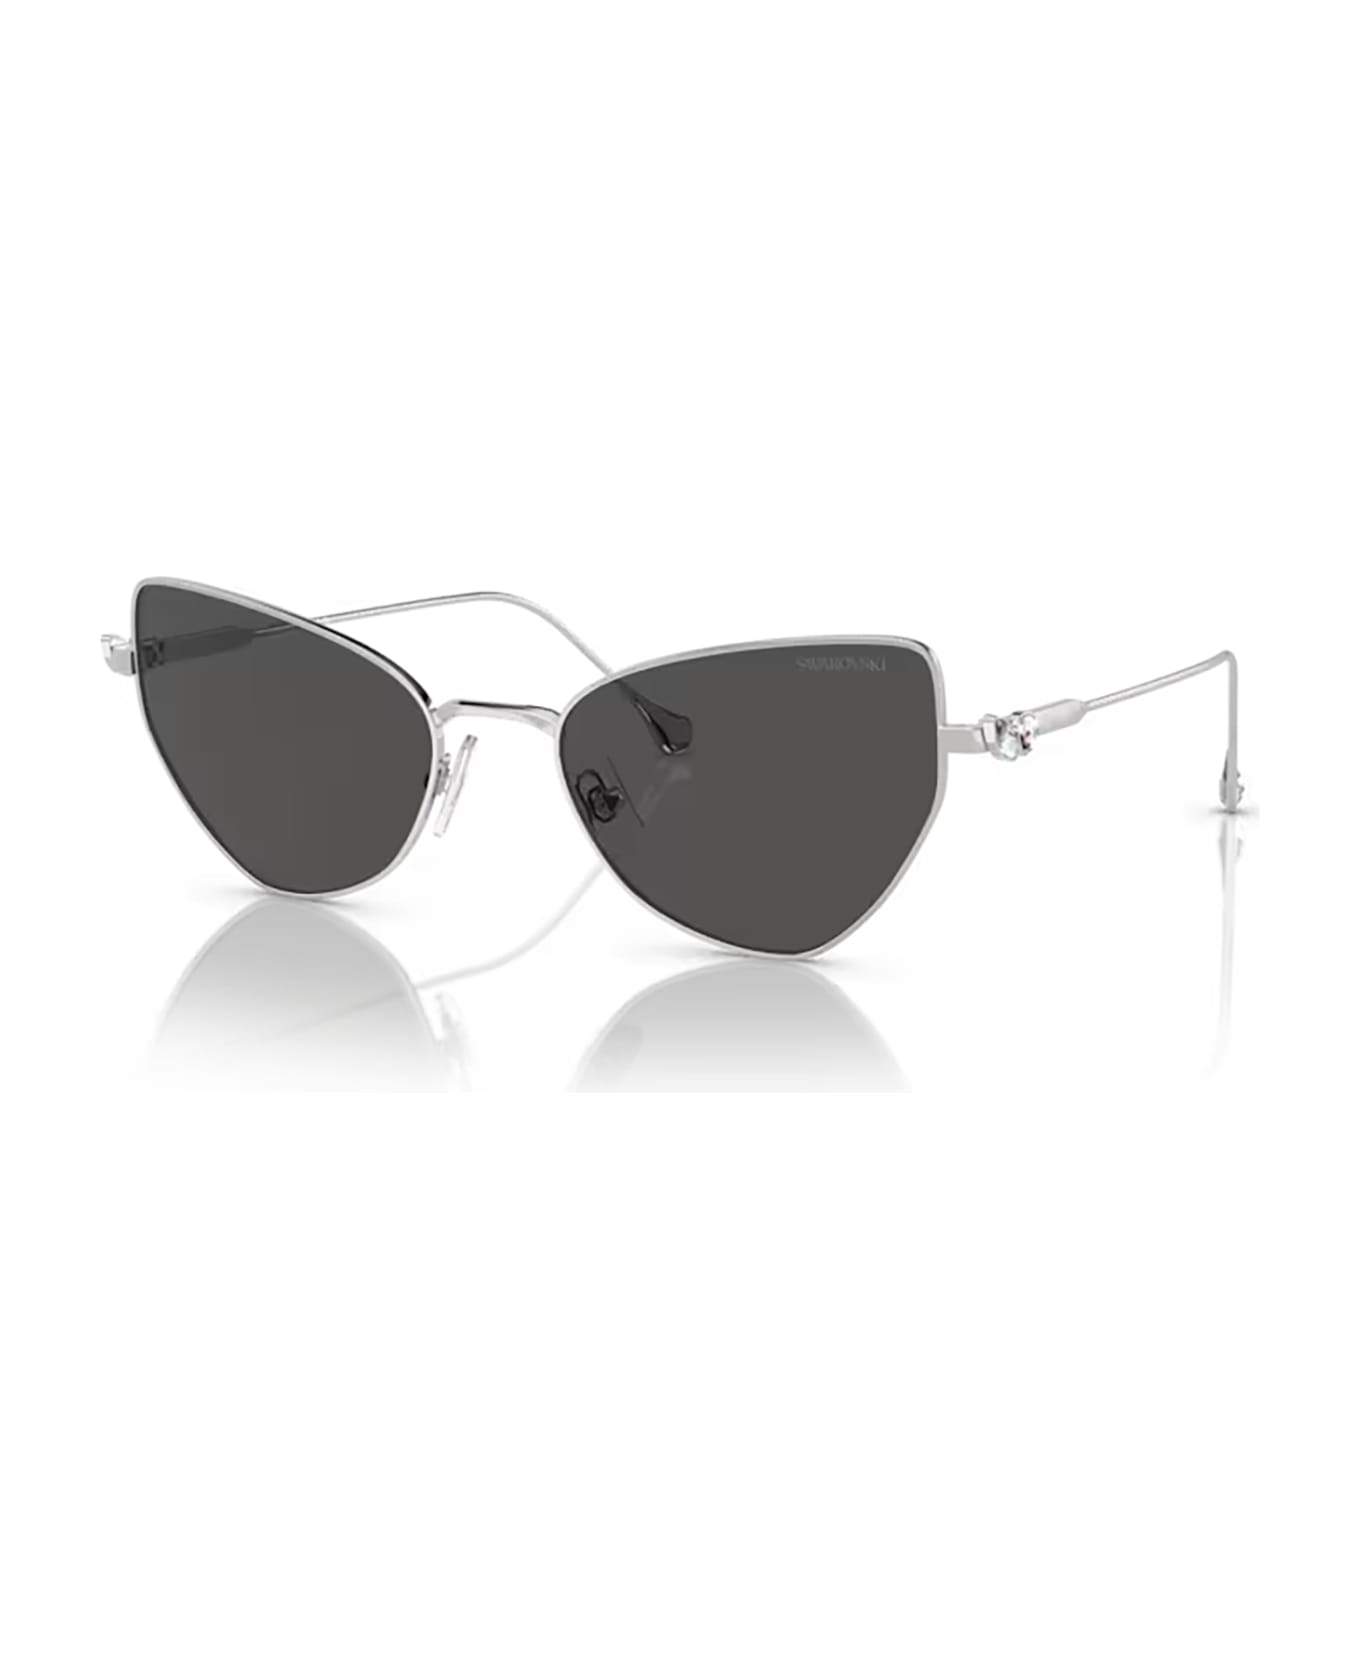 Swarovski Sk7011 Silver Sunglasses - Silver サングラス